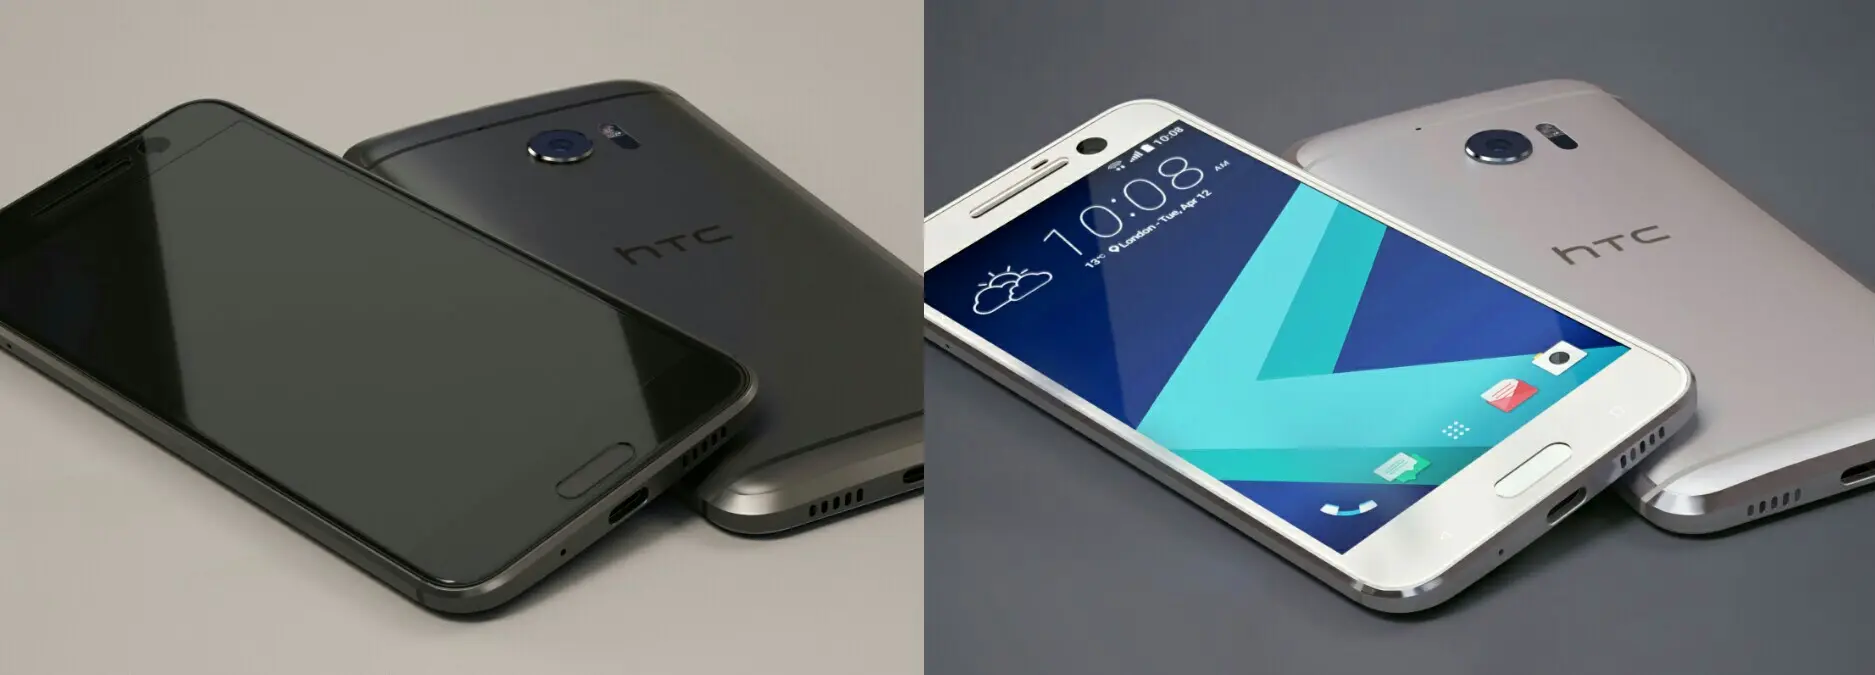 HTC_10_leaked_design